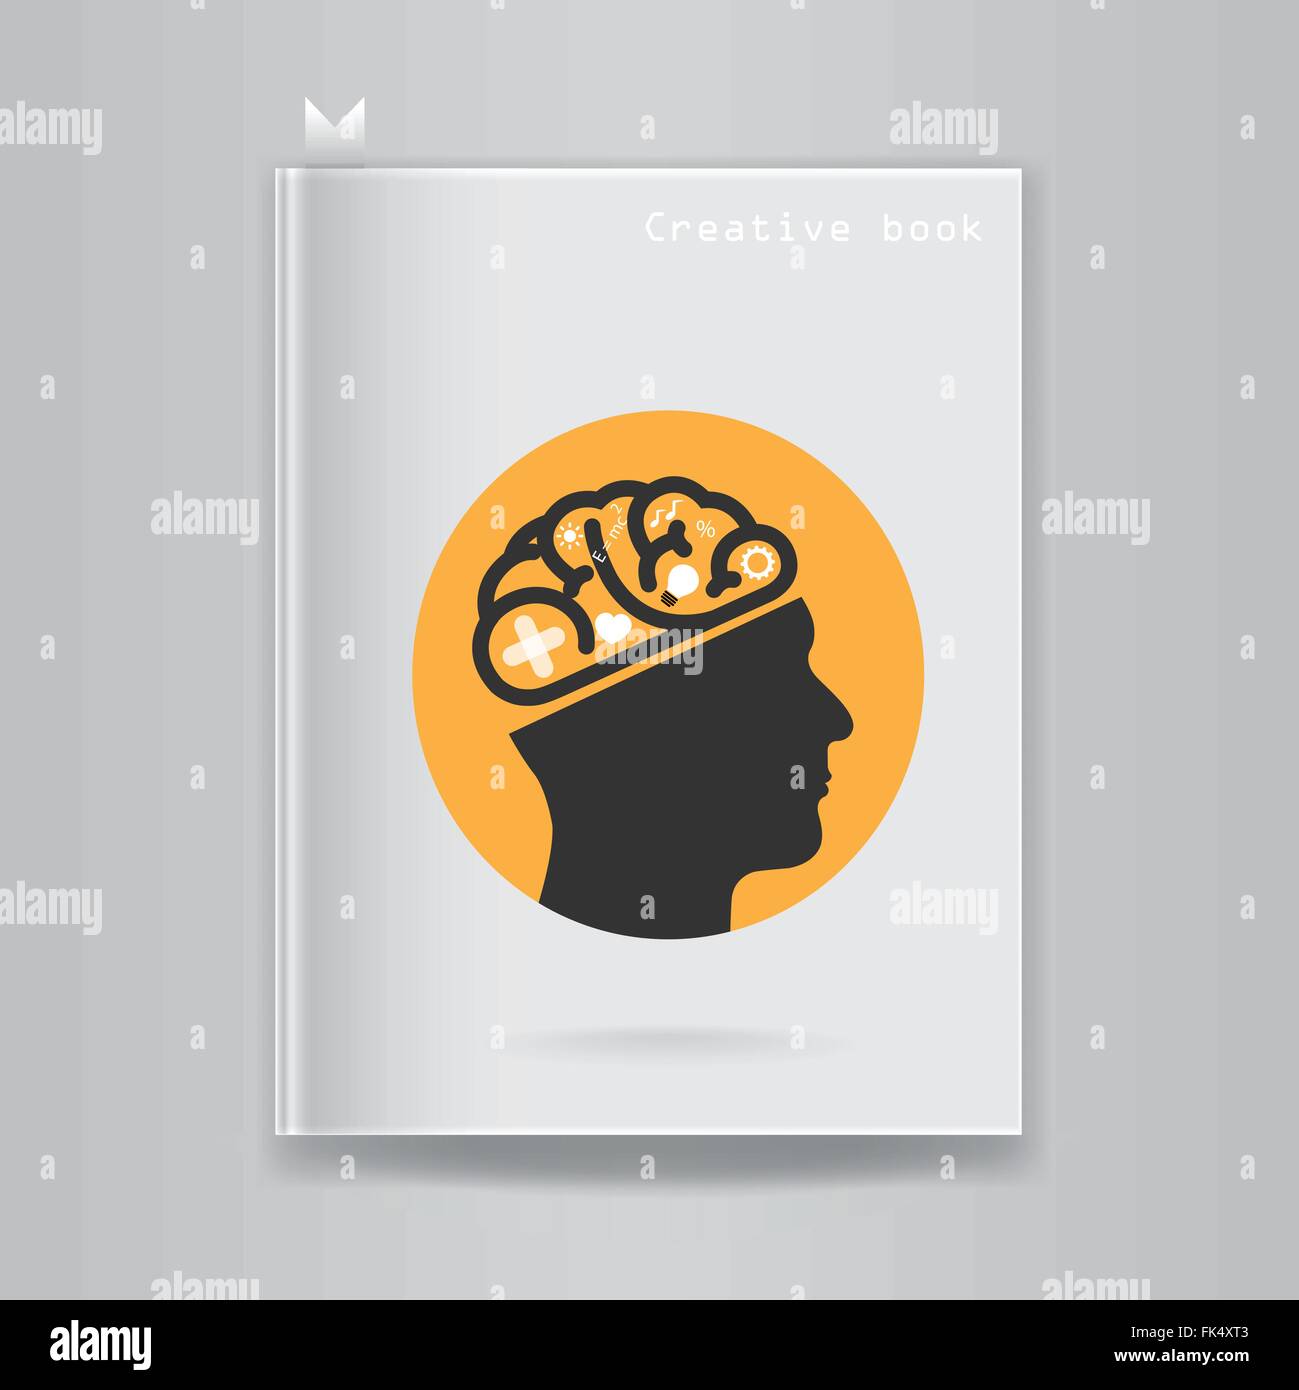 Kreative Gehirnhälfte Idee Konzept auf leeres Buch-Cover. Vektor-illustration Stock Vektor